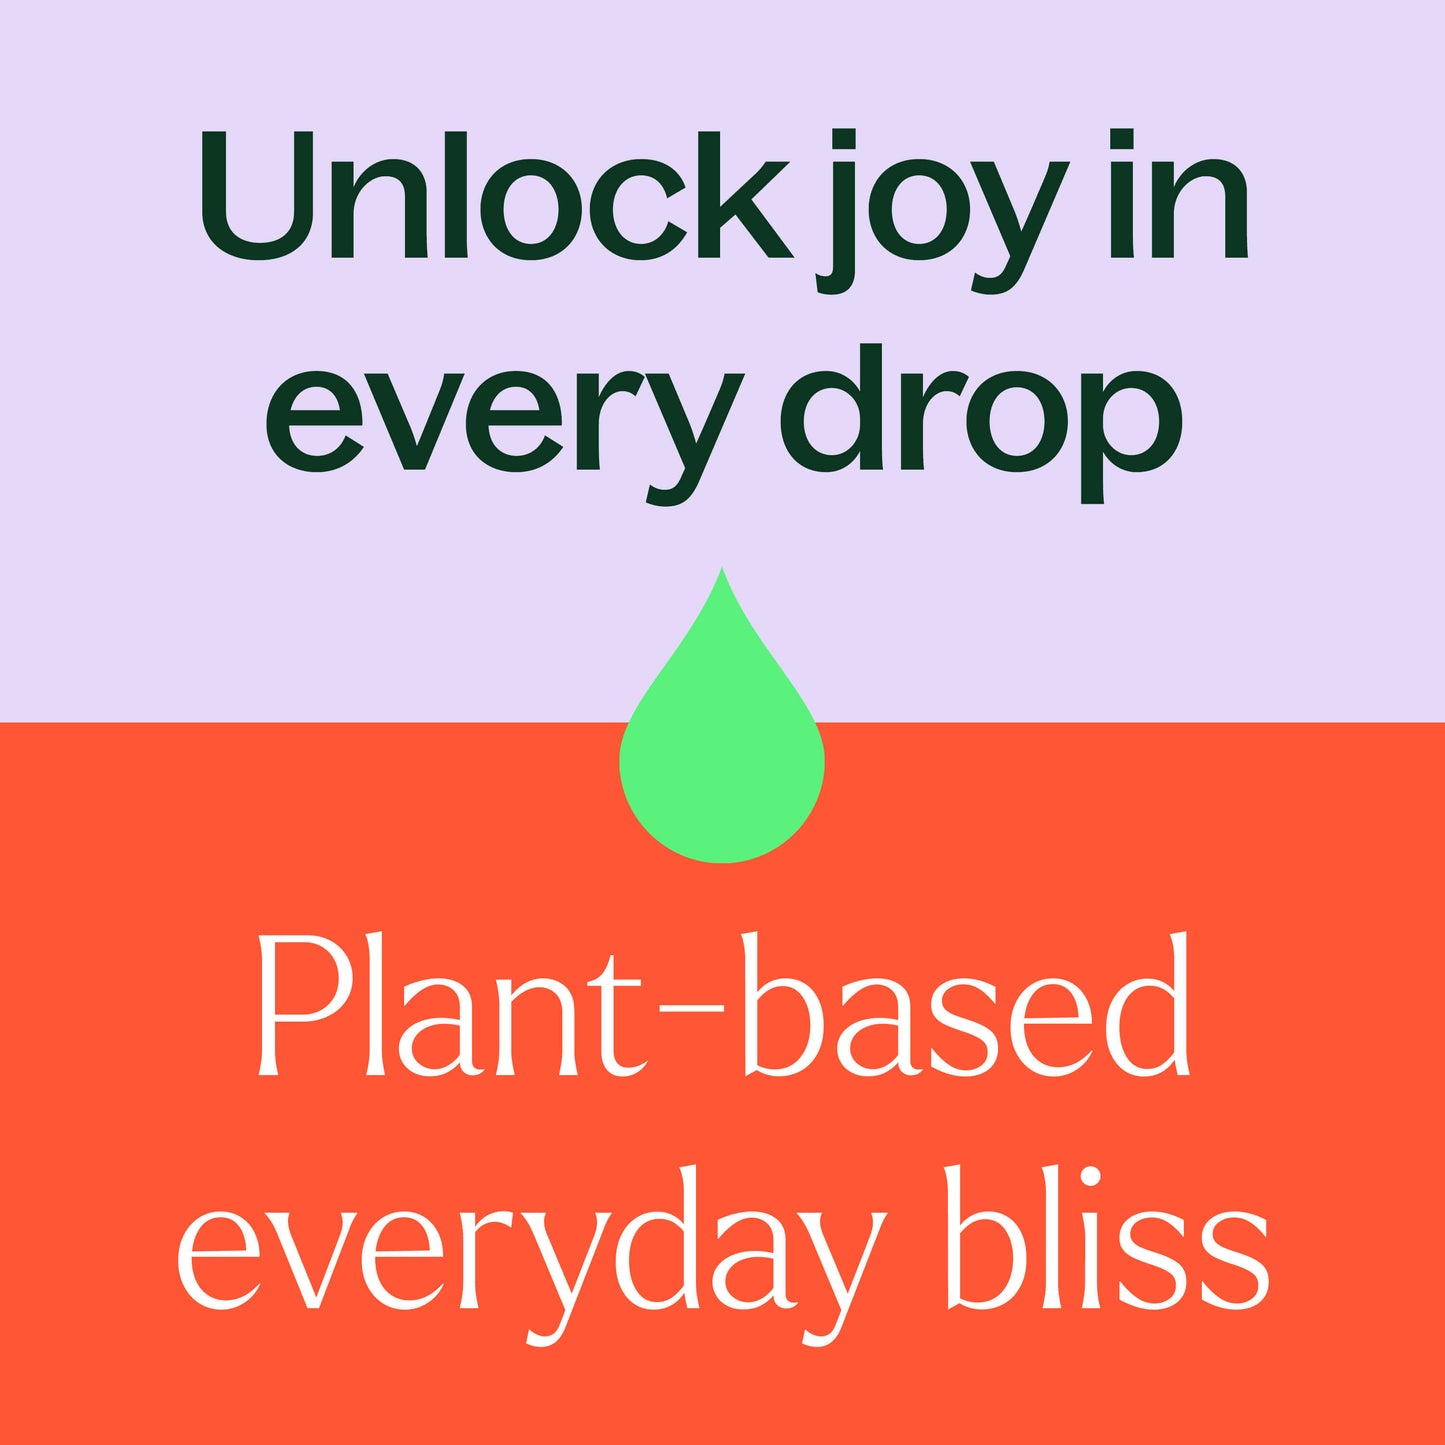 Unlock joy in every drop. Plant-based everyday bliss